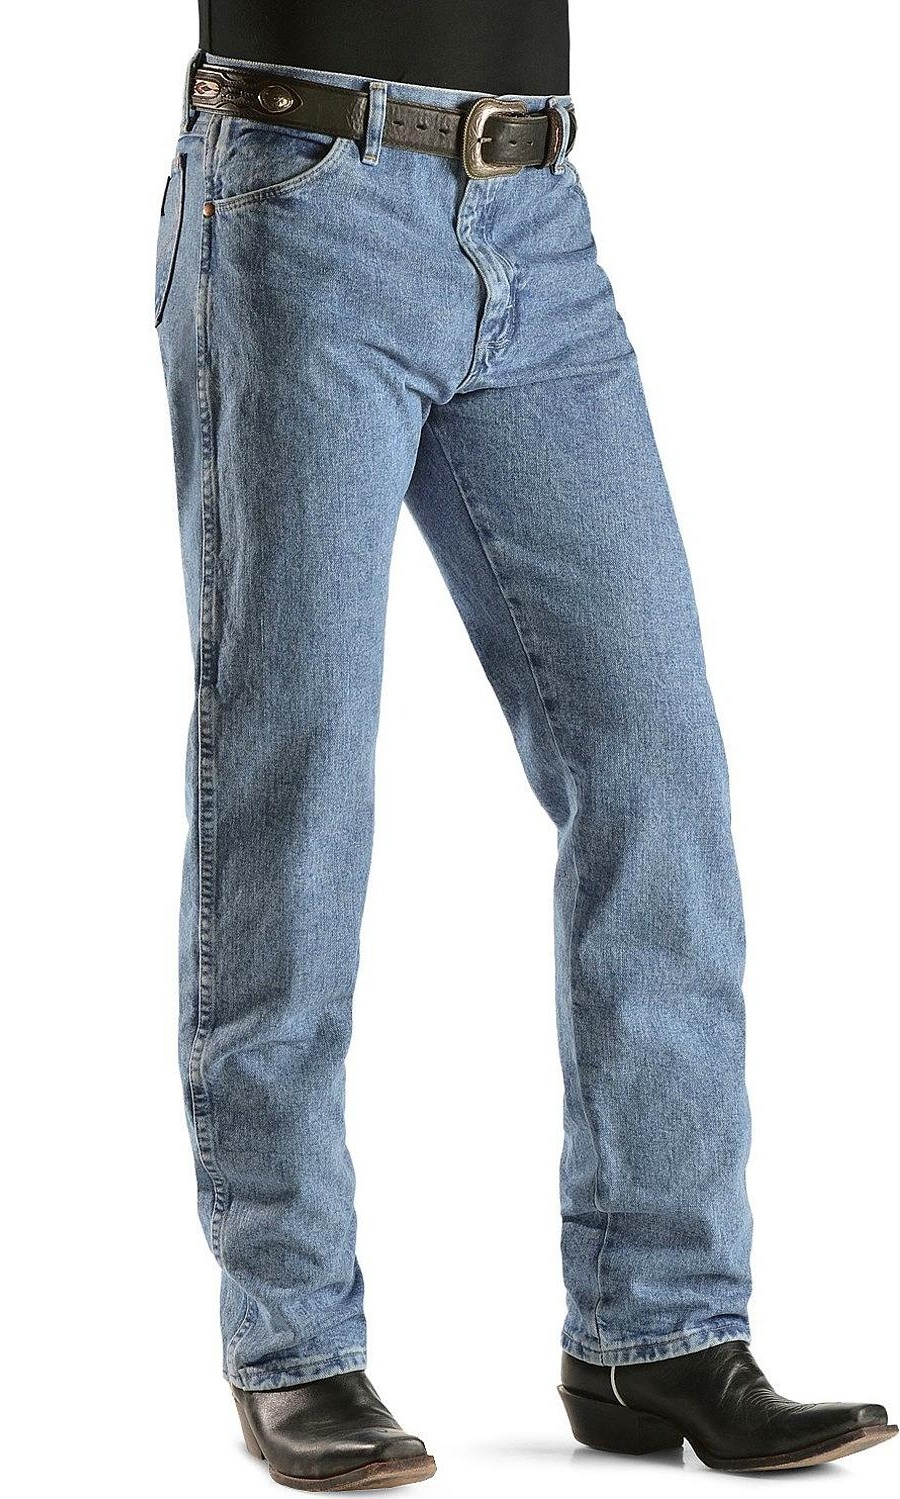 Wrangler Men's Jeans Relaxed Original fit premium wash reg - 13mwzro_x5 - image 2 of 2